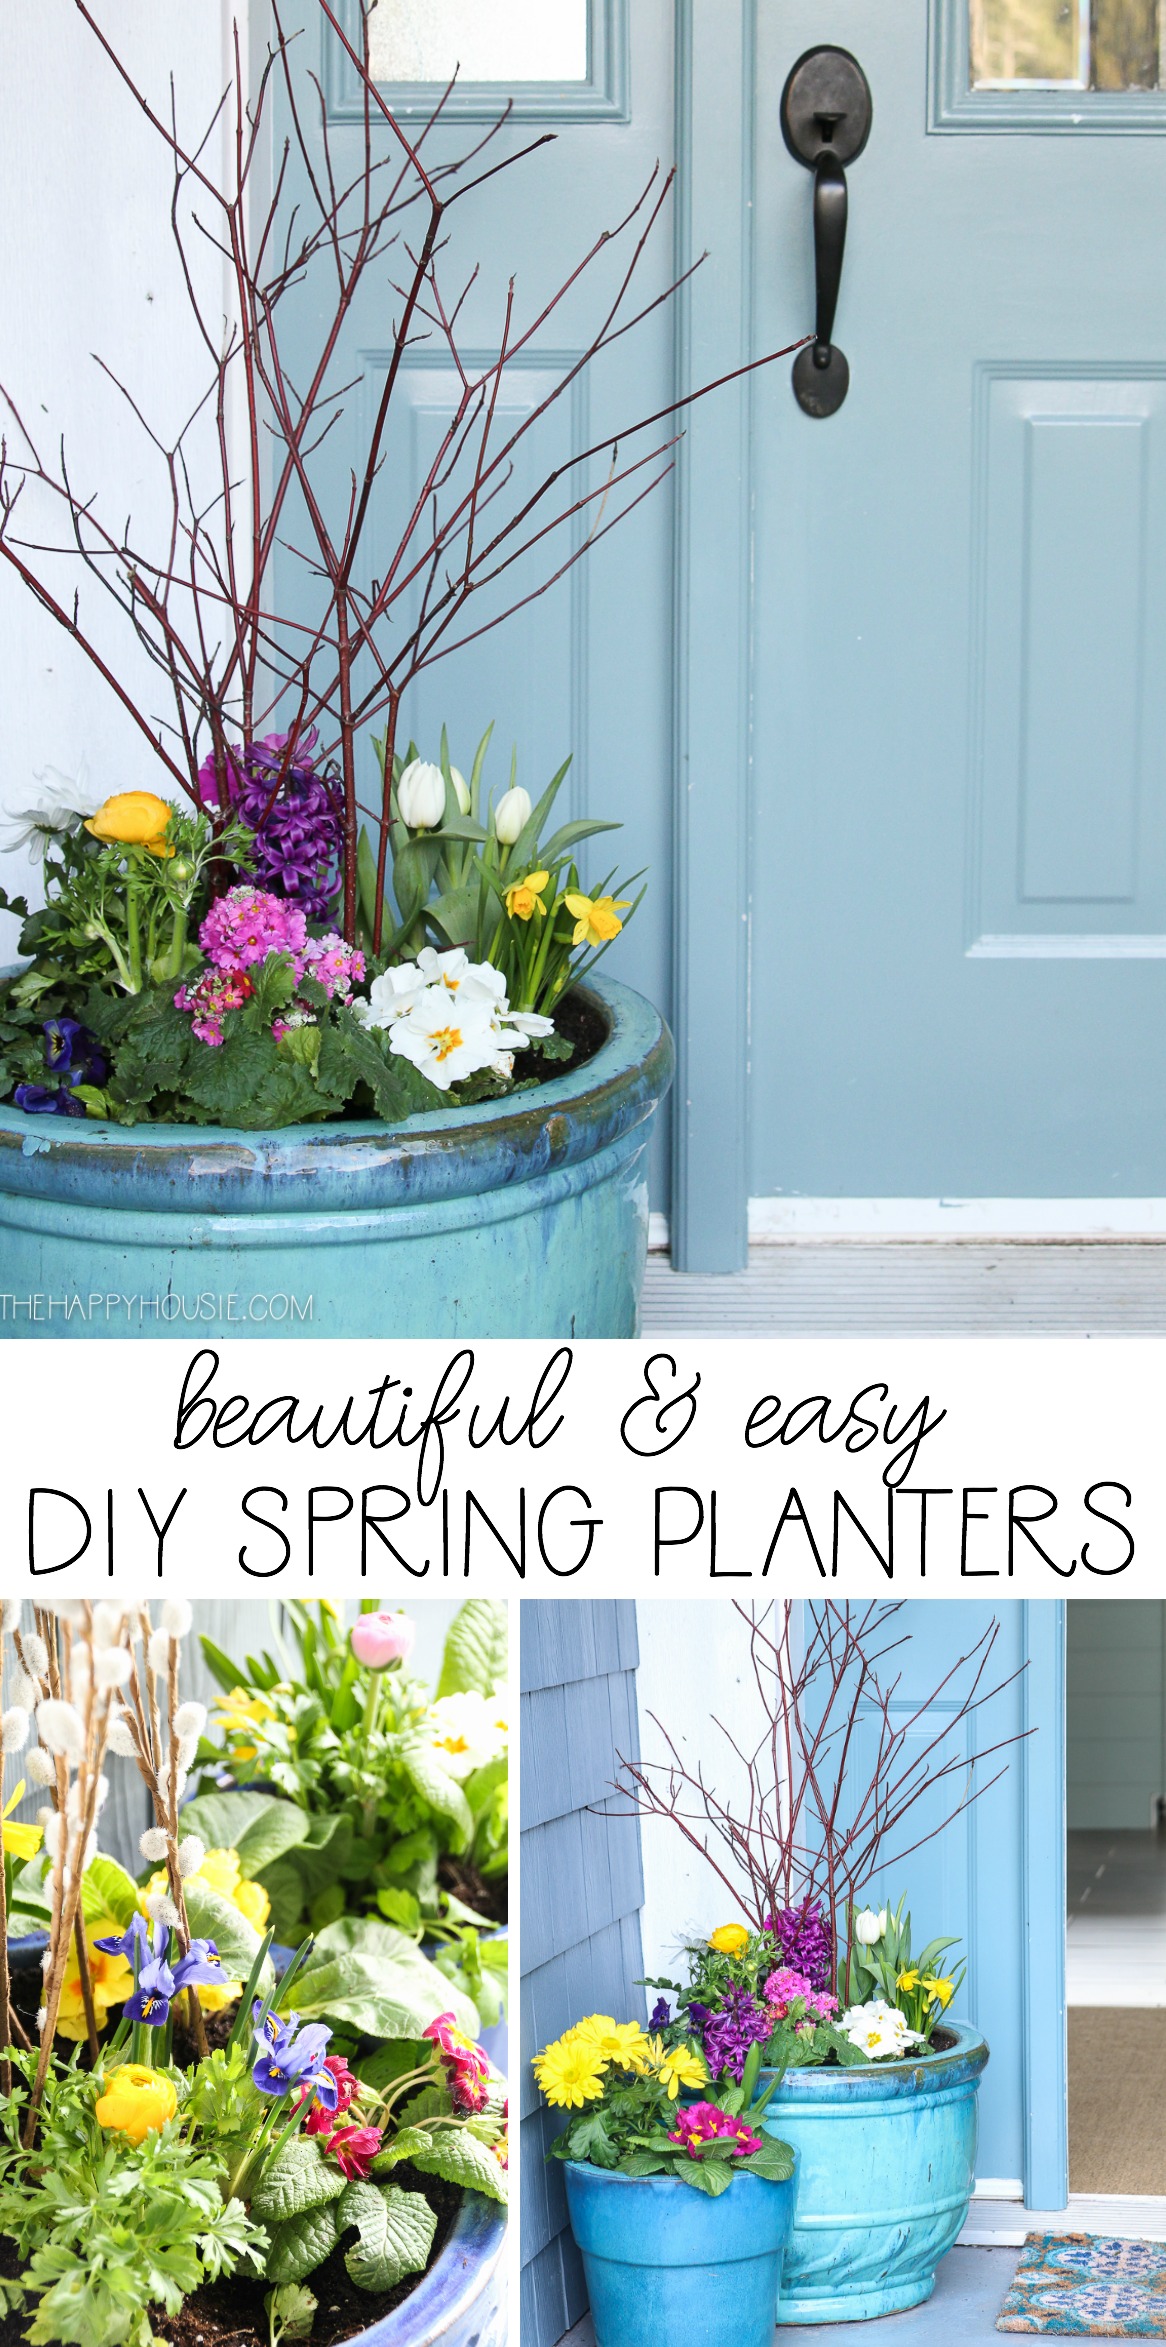 DIY Spring Planters poster.